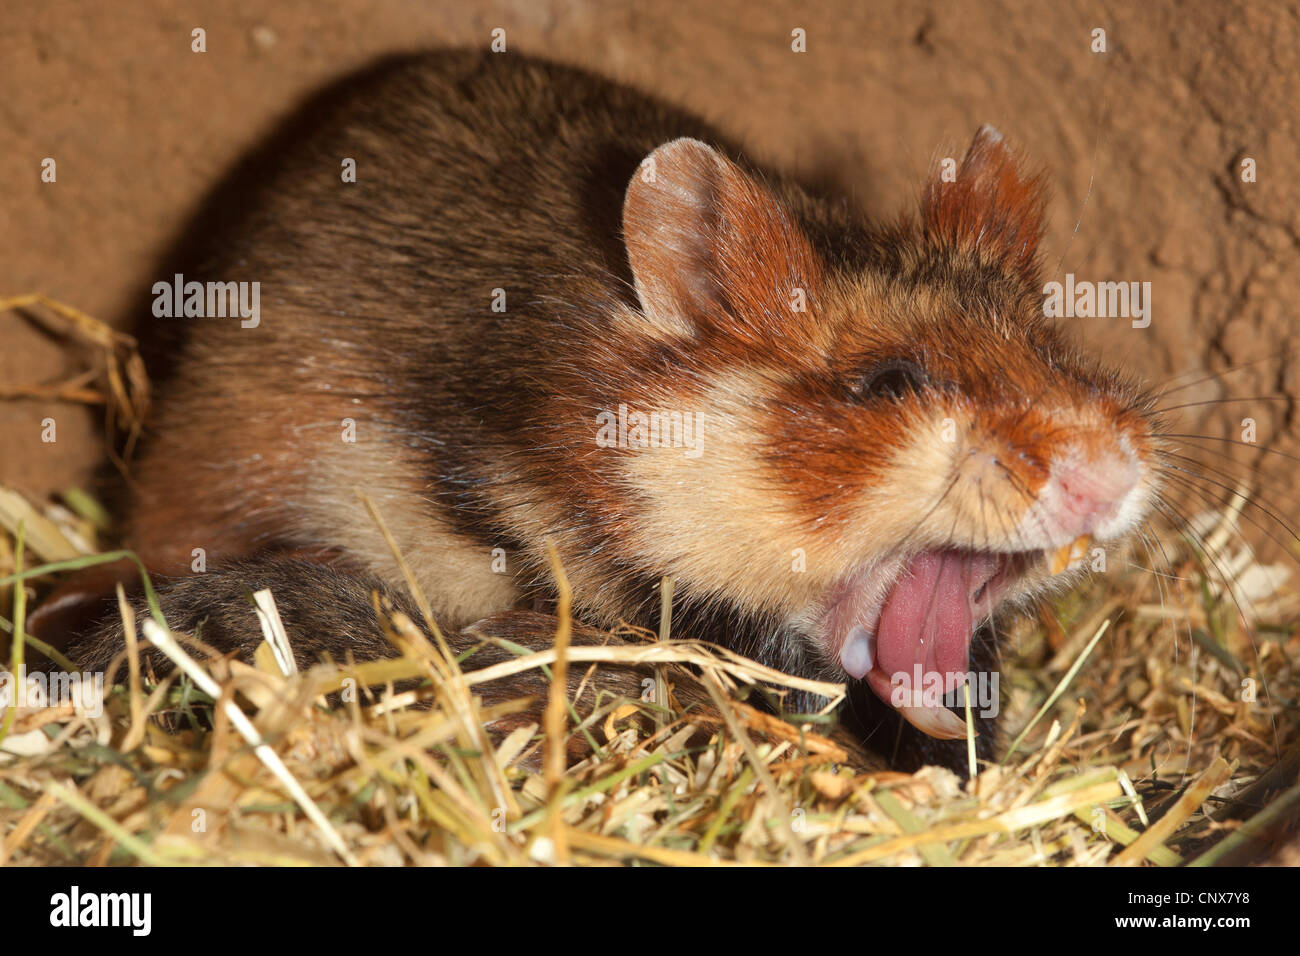 Hamster commun, black-bellied grand hamster (Cricetus cricetus), femelle béant dans sa tanière, Allemagne Banque D'Images